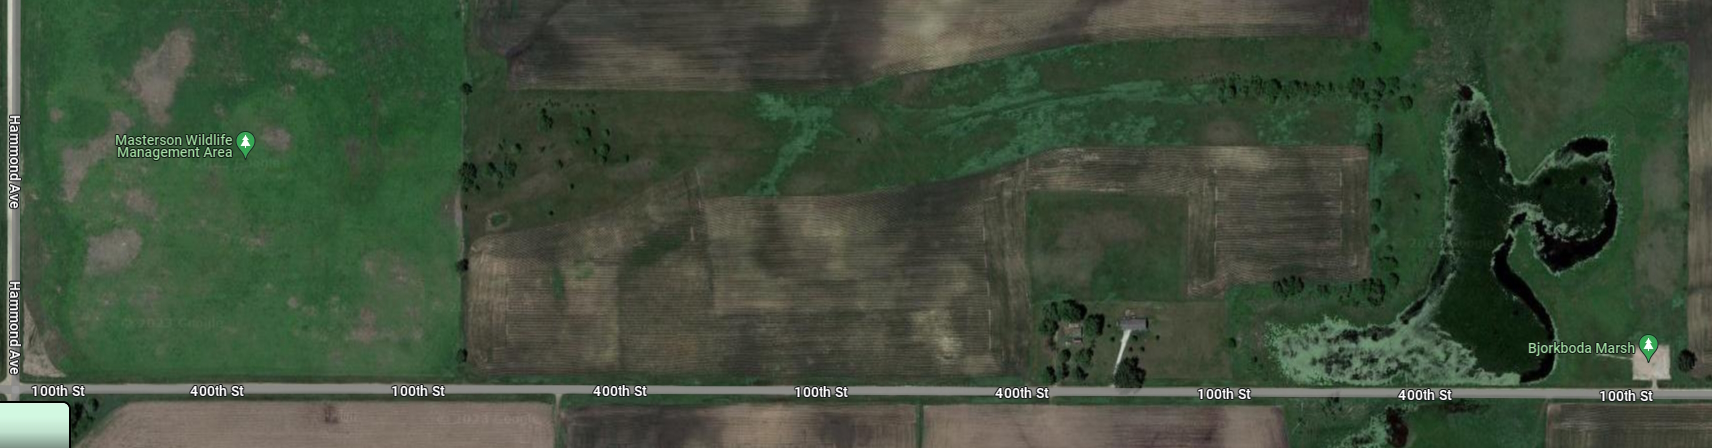 Aerial map of the Masterson's and the Bjorkboda Wildlife Areas in Hamilton County Iowa